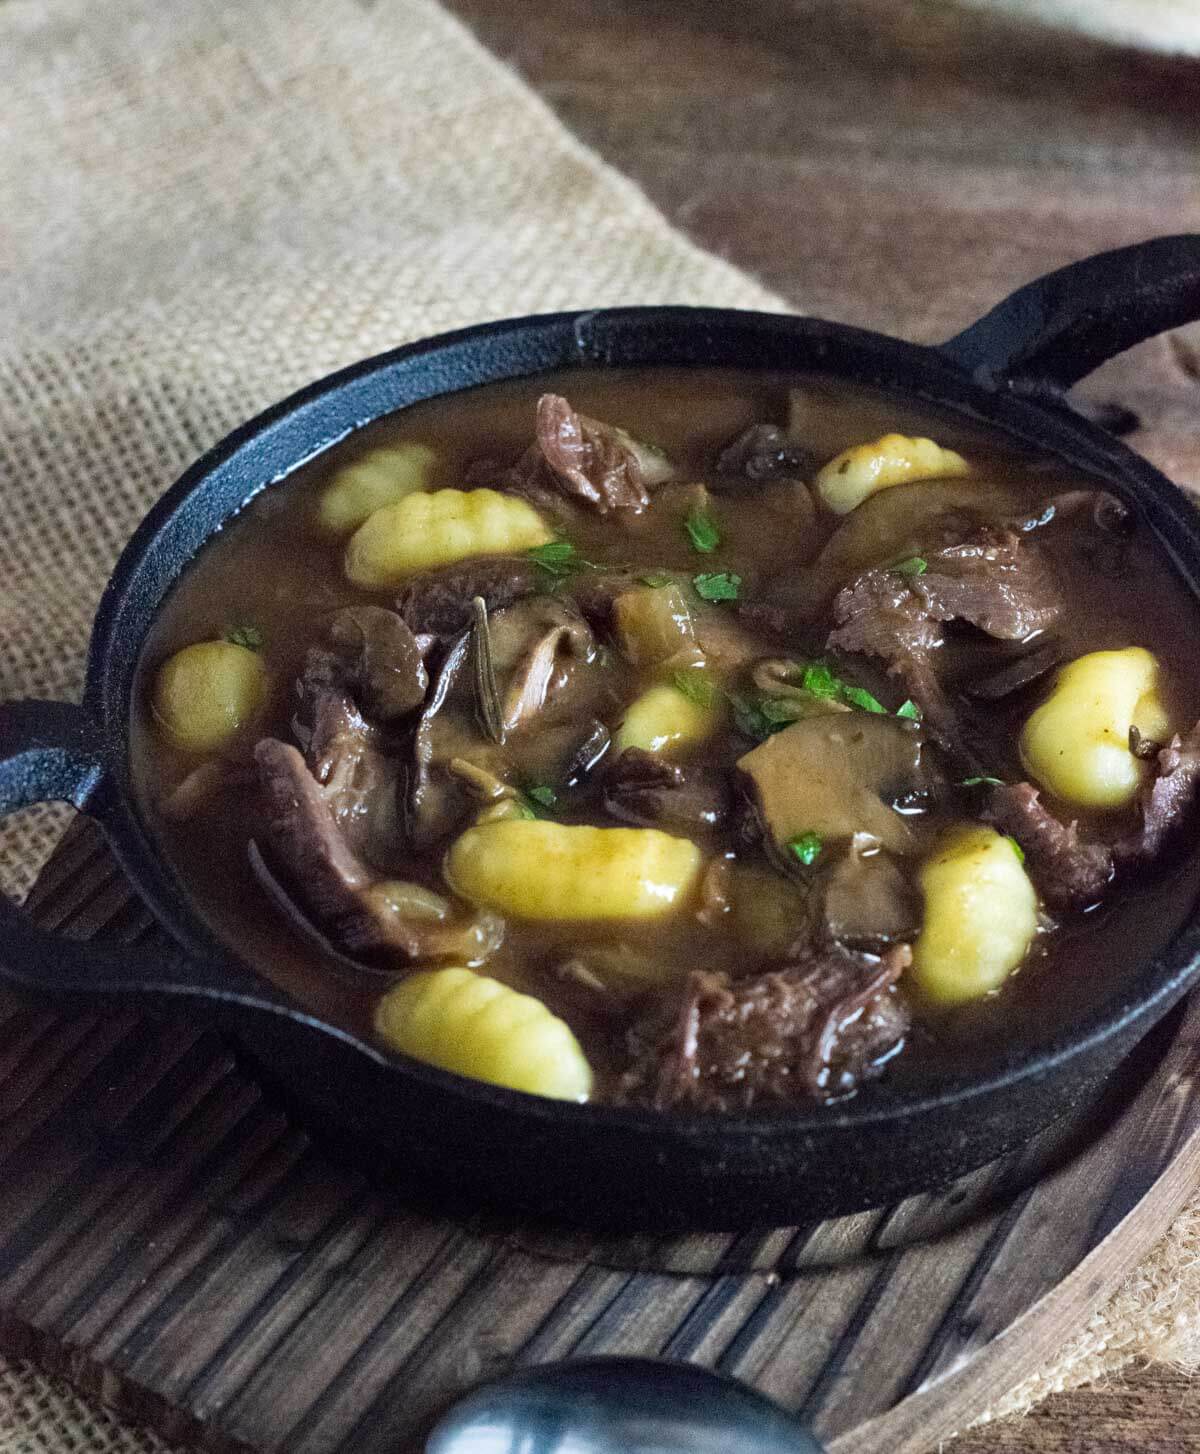 Crock pot venison stew shown in black bowl.